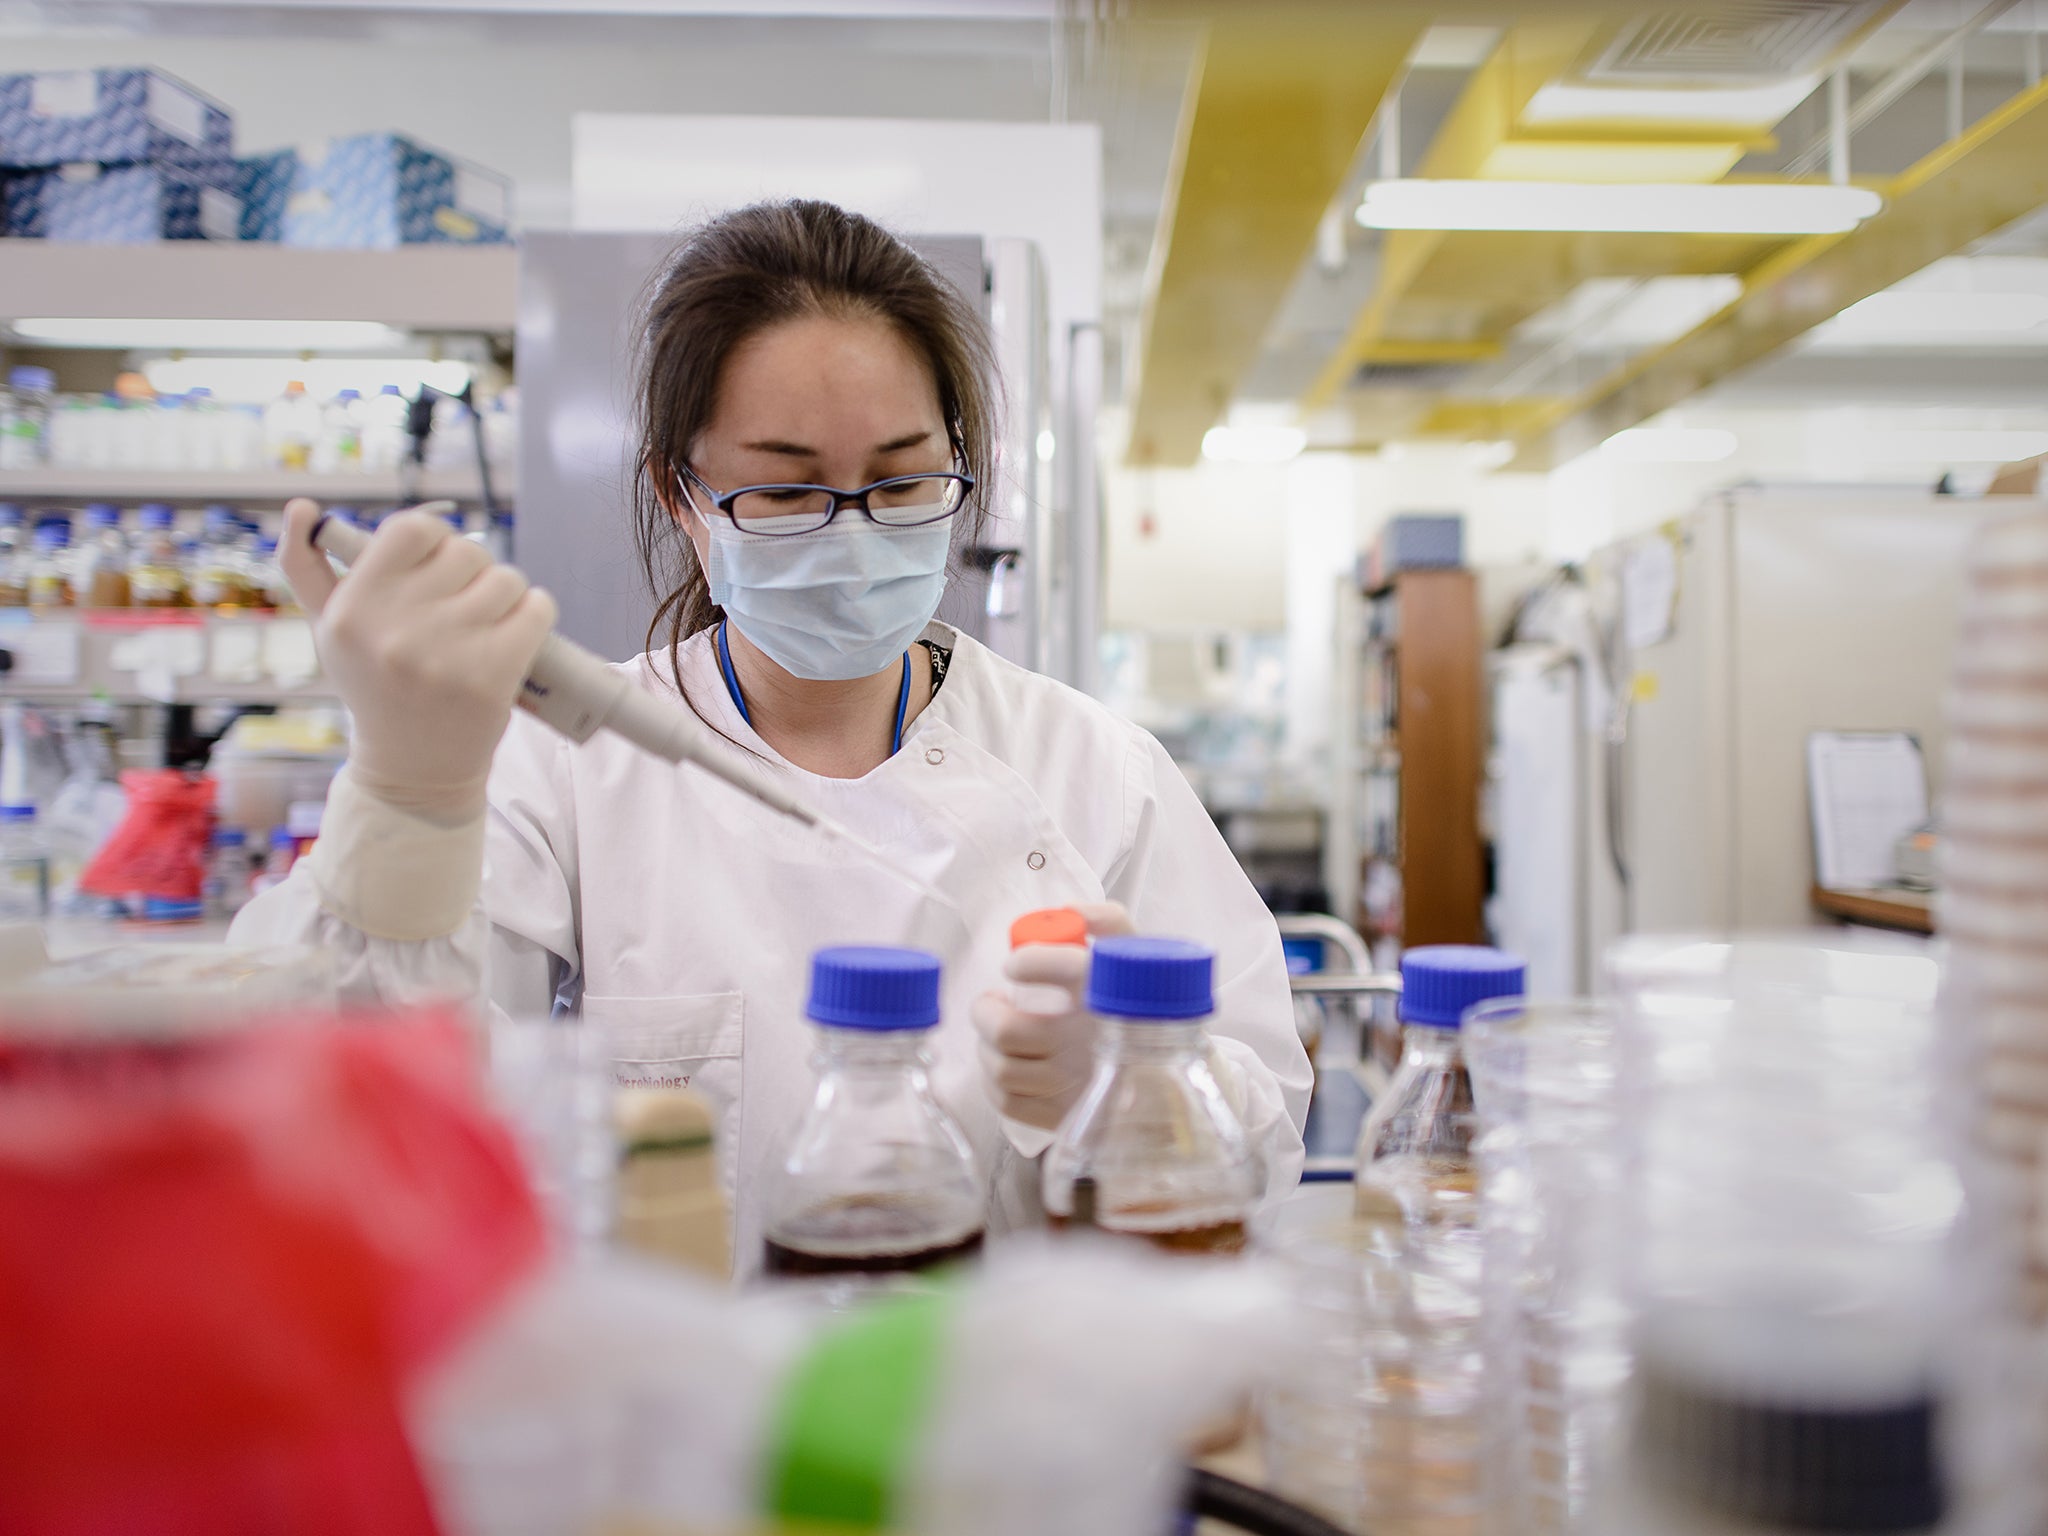 Women are still underrepresented in science